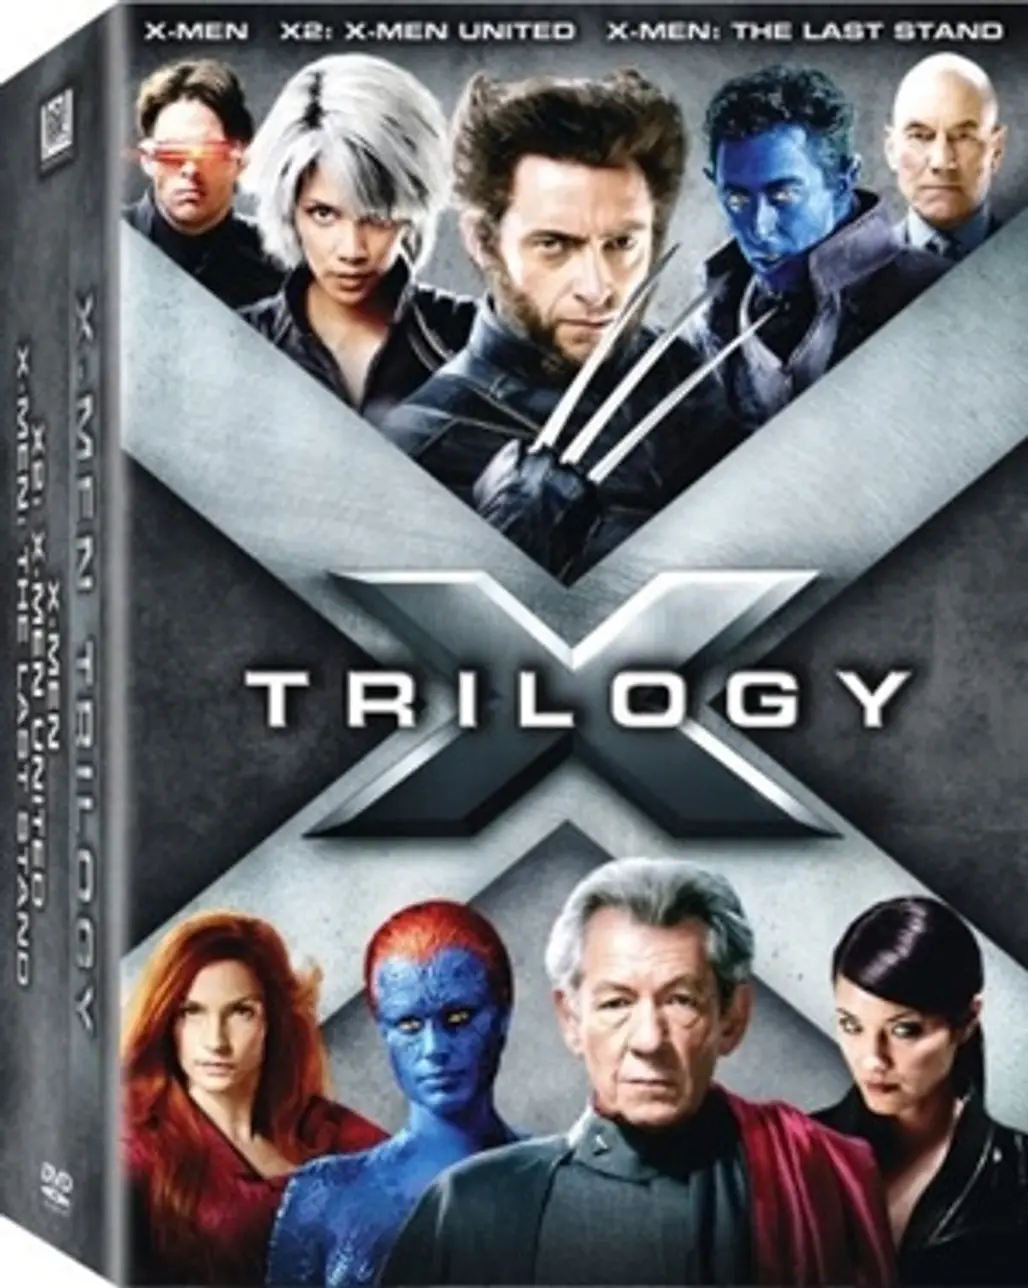 The X-Men Trilogy